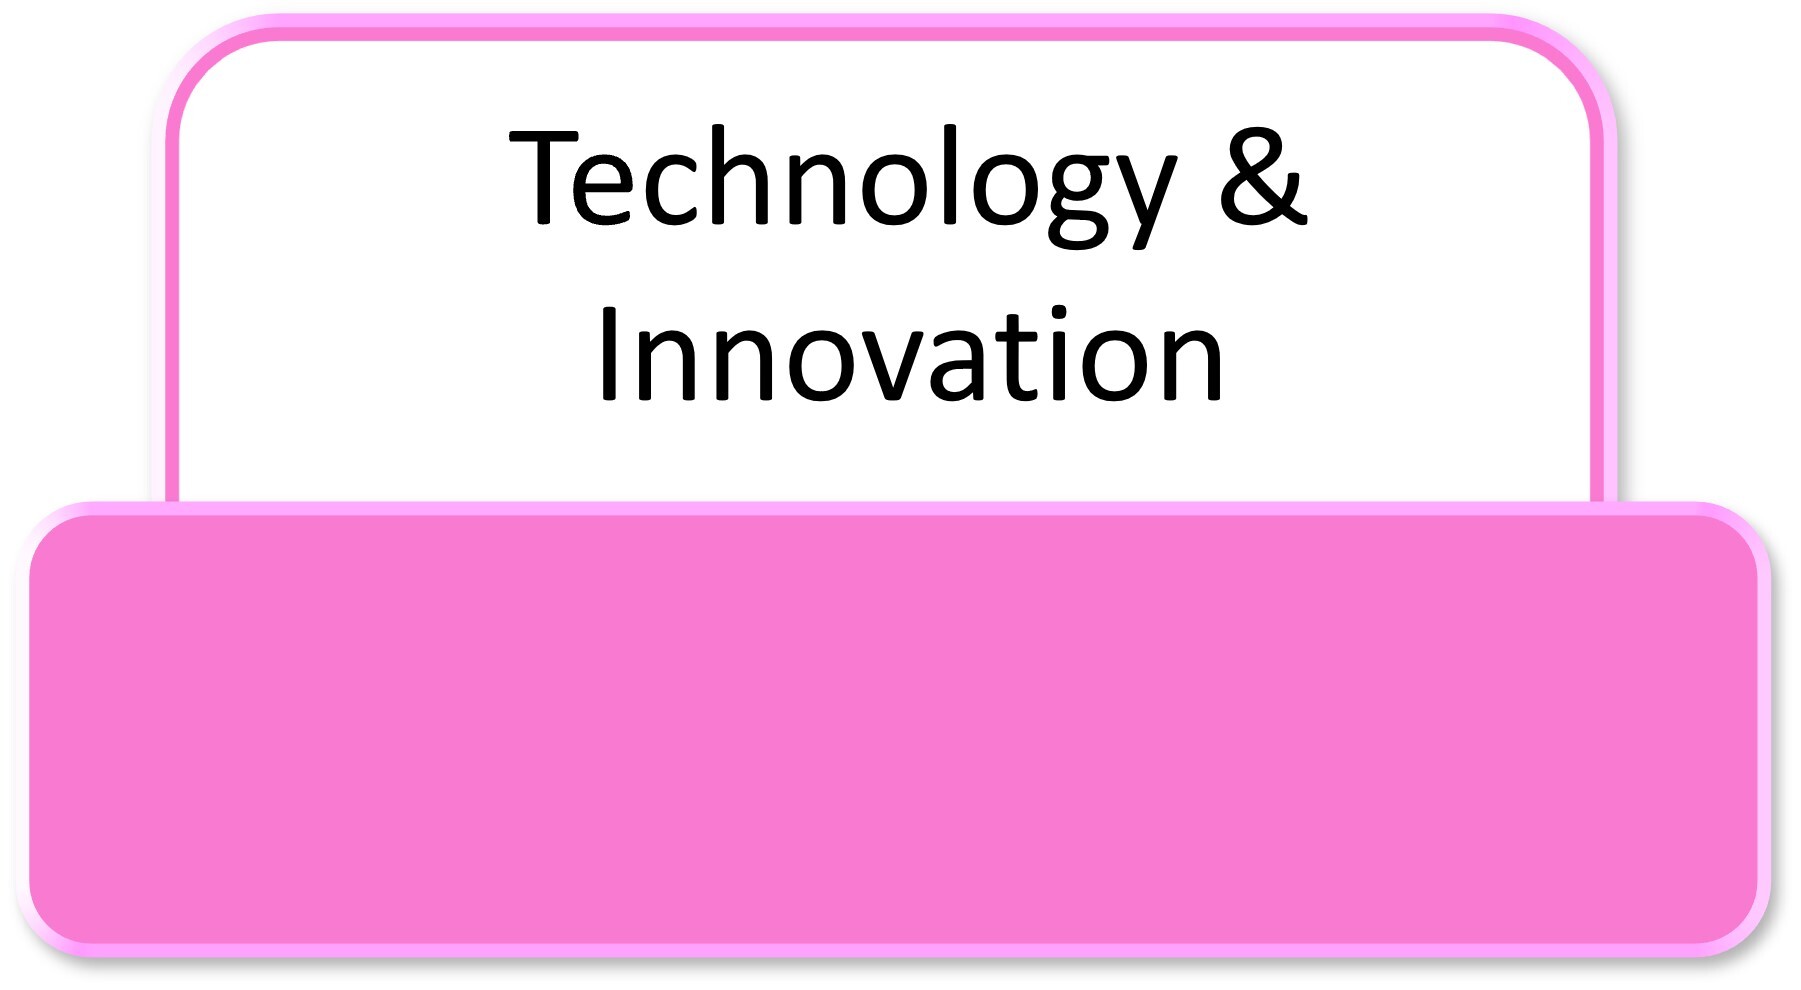 LNC Academy website - Technology & Innovation - 210223.jpg